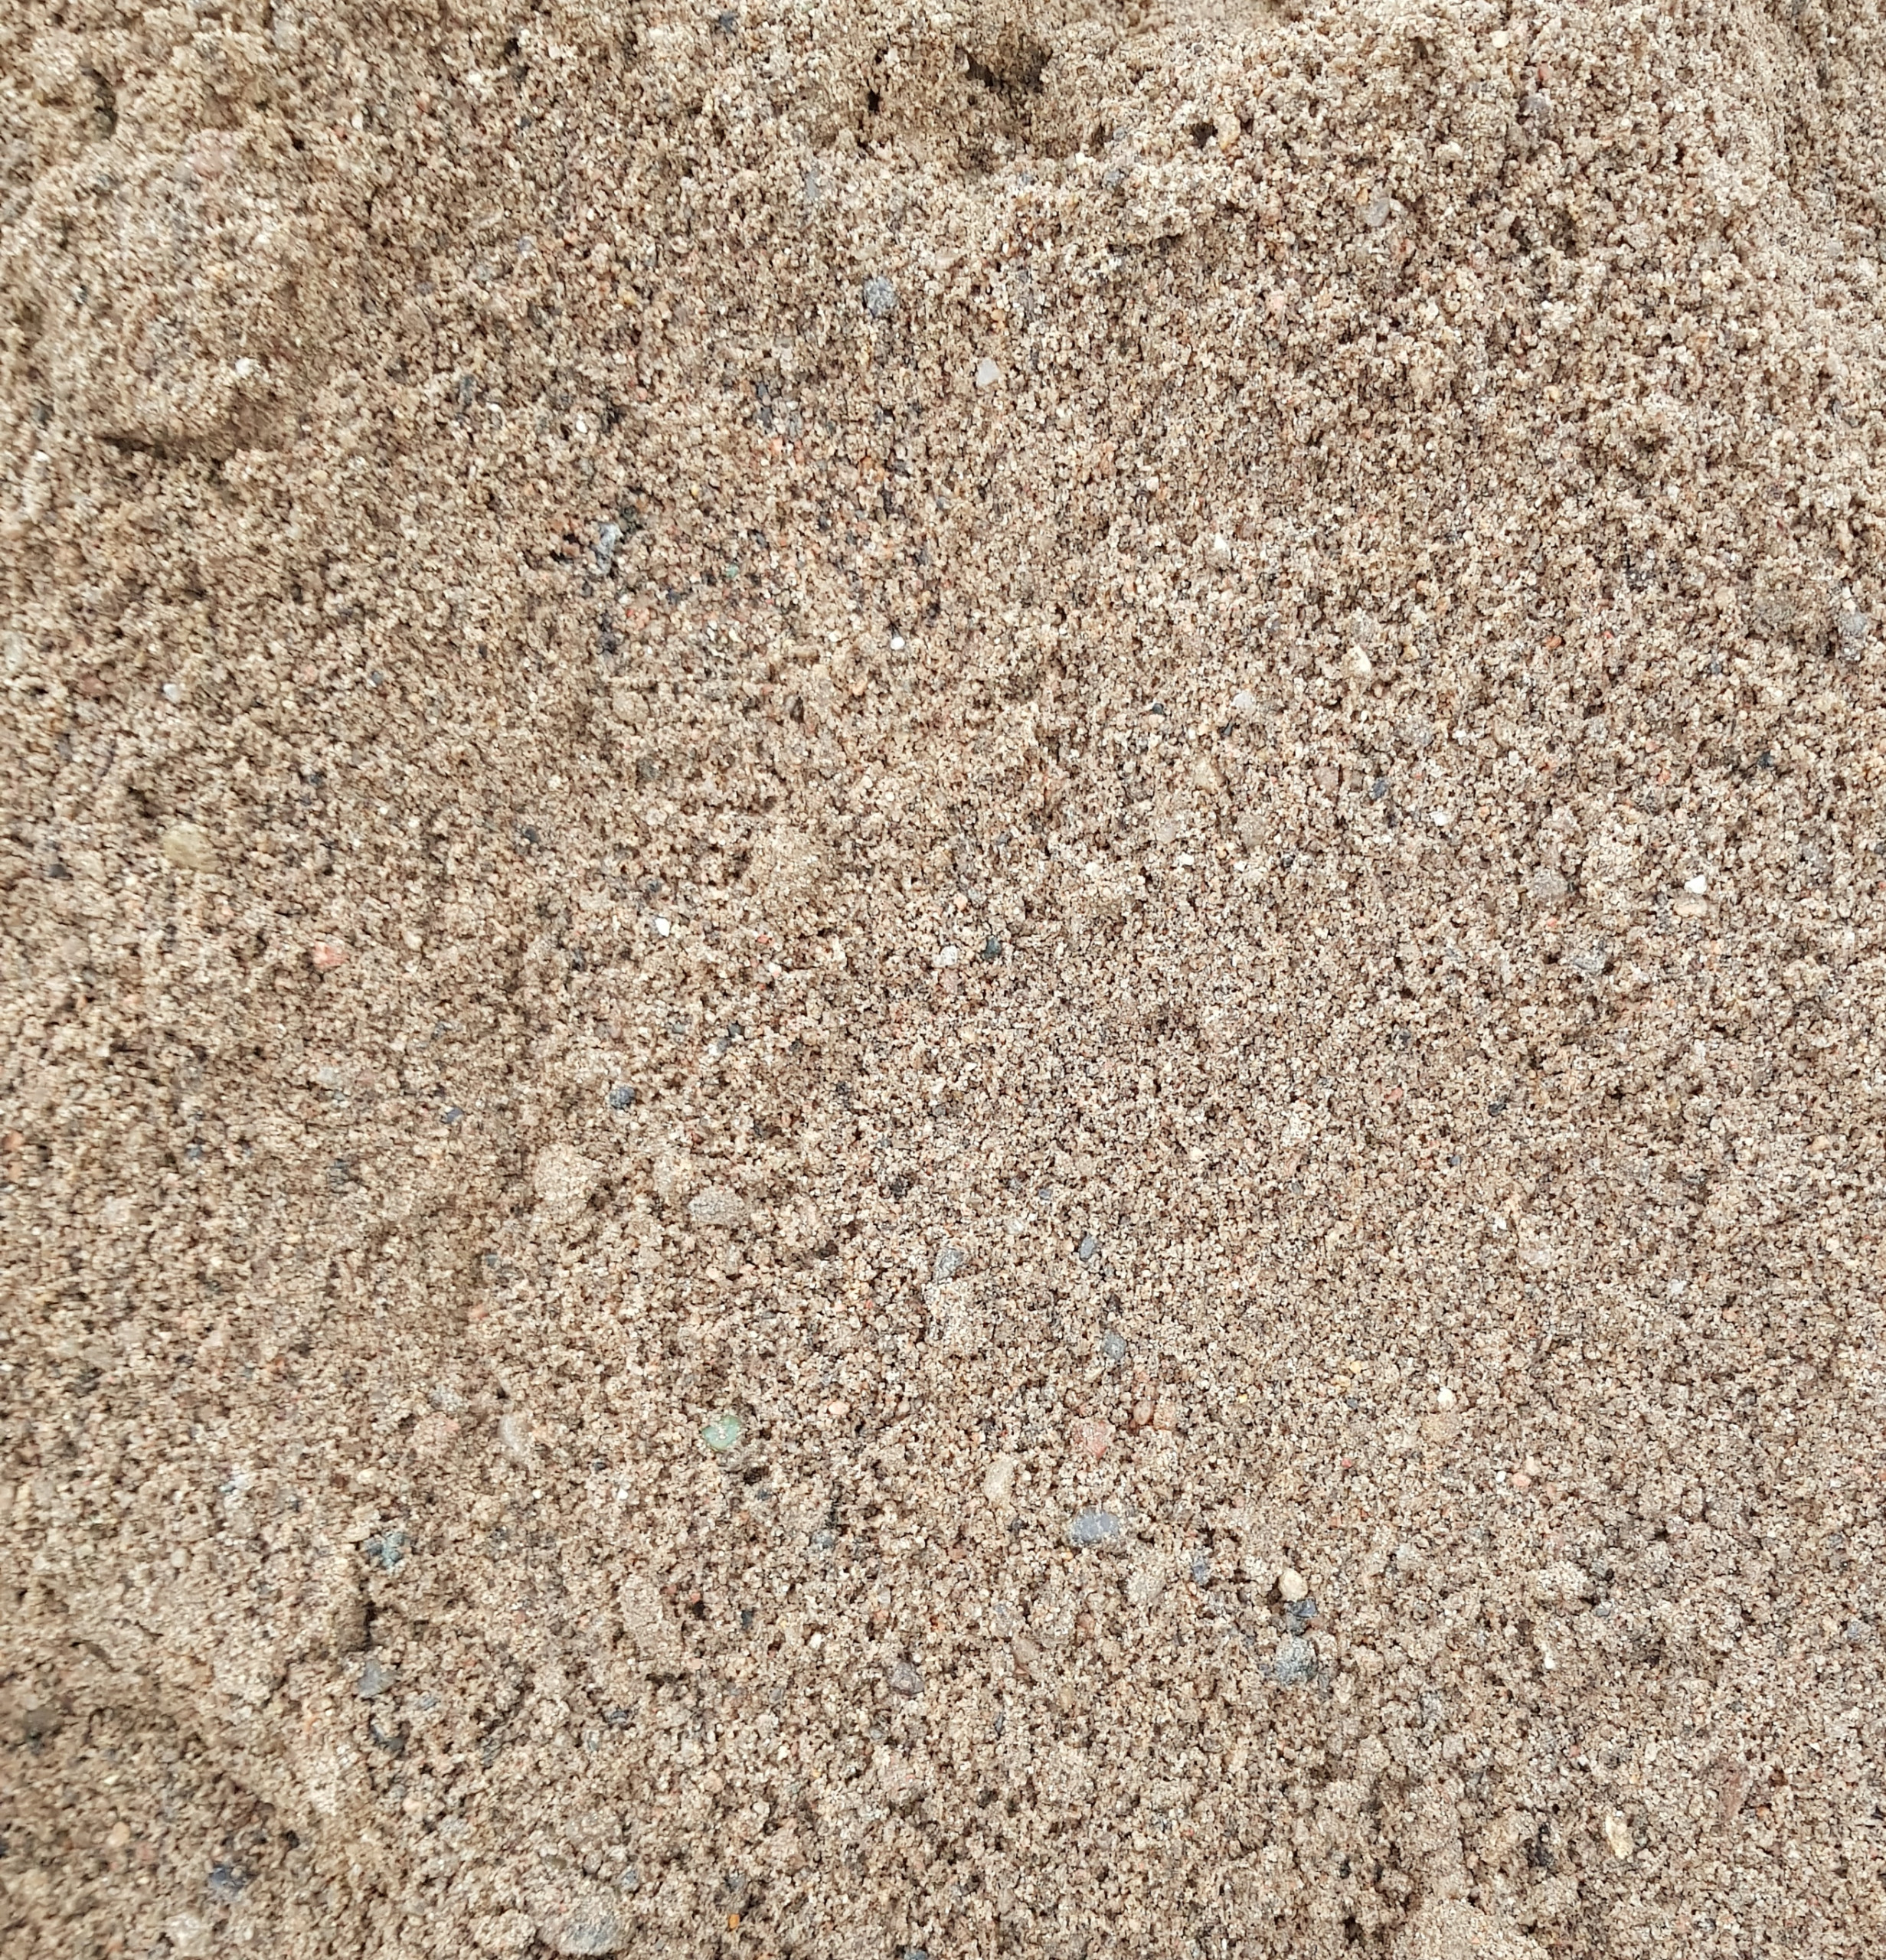 Screened sand